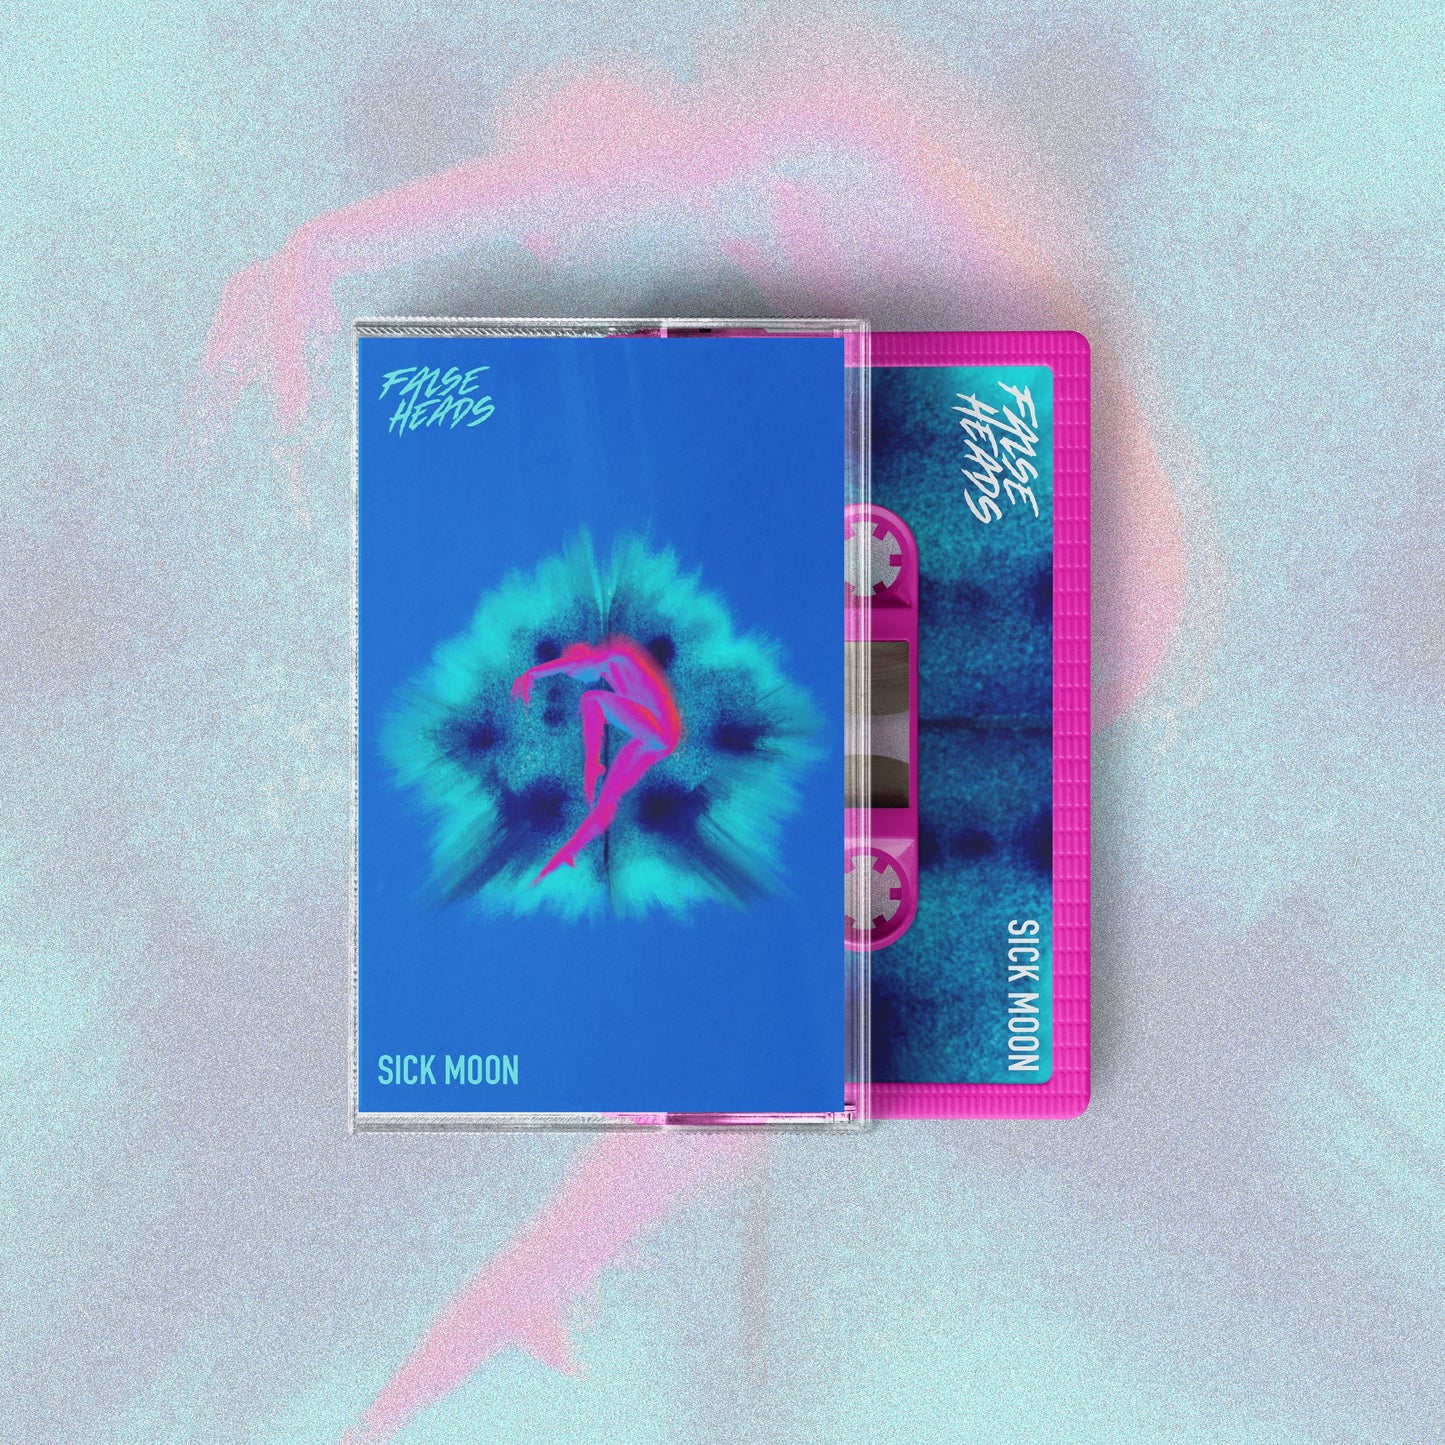 False Heads 'Sick Moon' LP - Cassette - Pink Tape